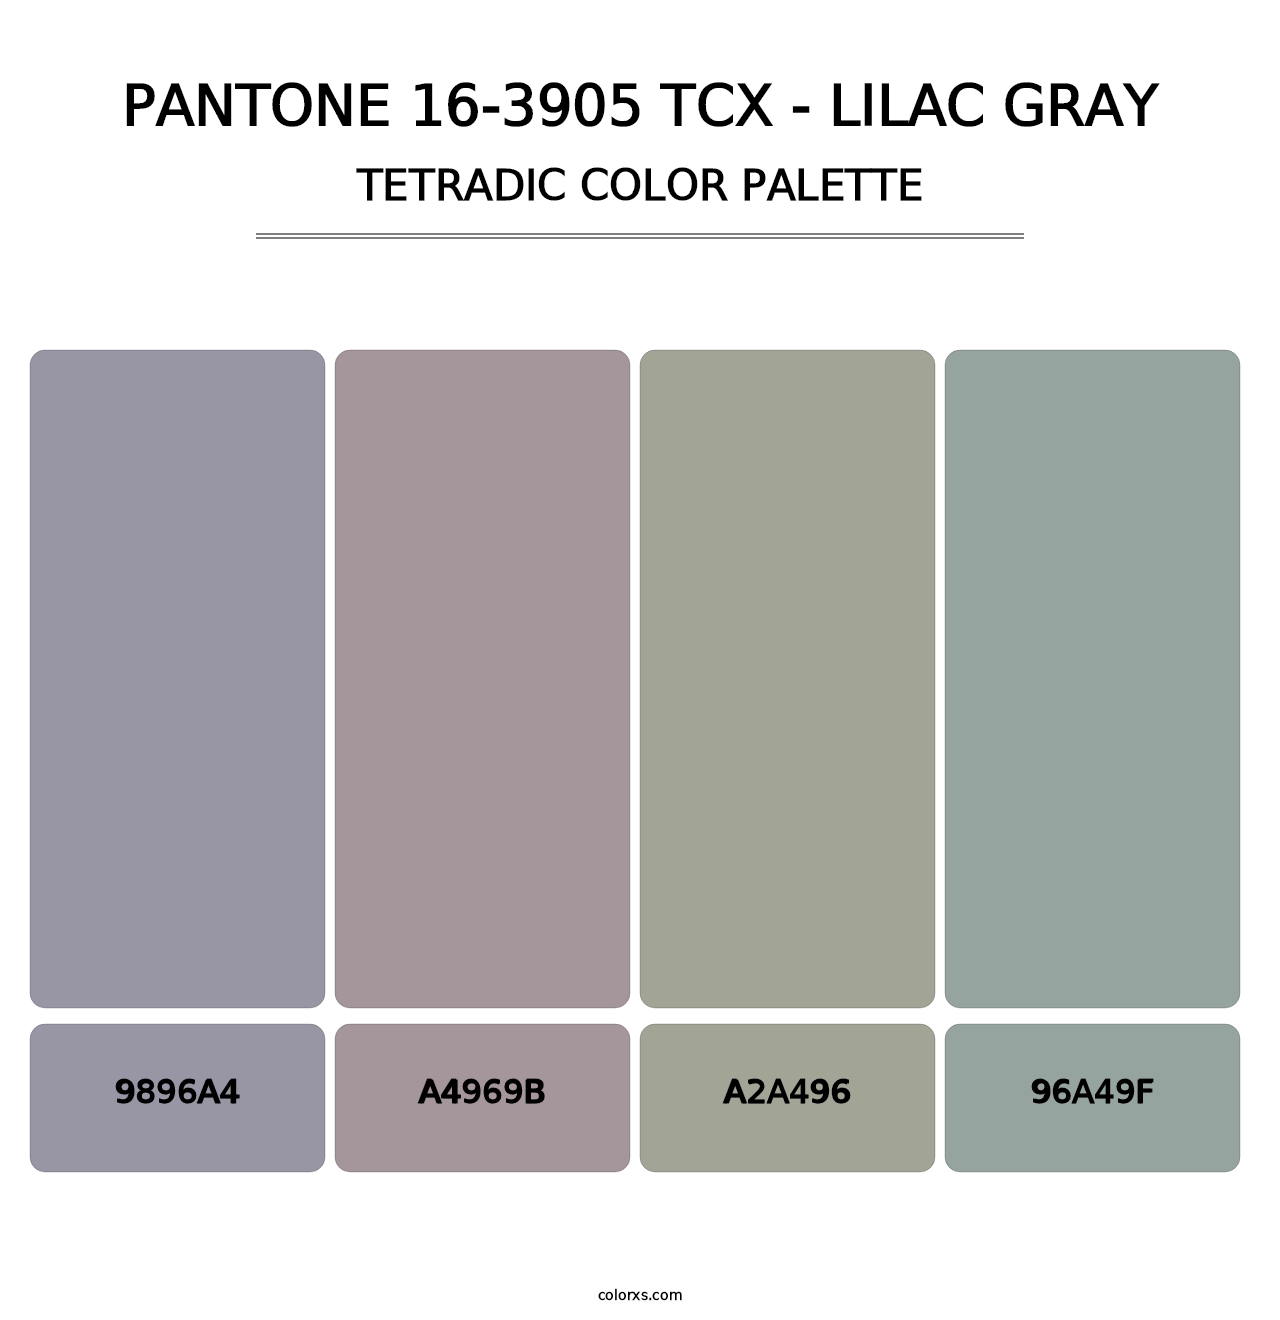 PANTONE 16-3905 TCX - Lilac Gray - Tetradic Color Palette